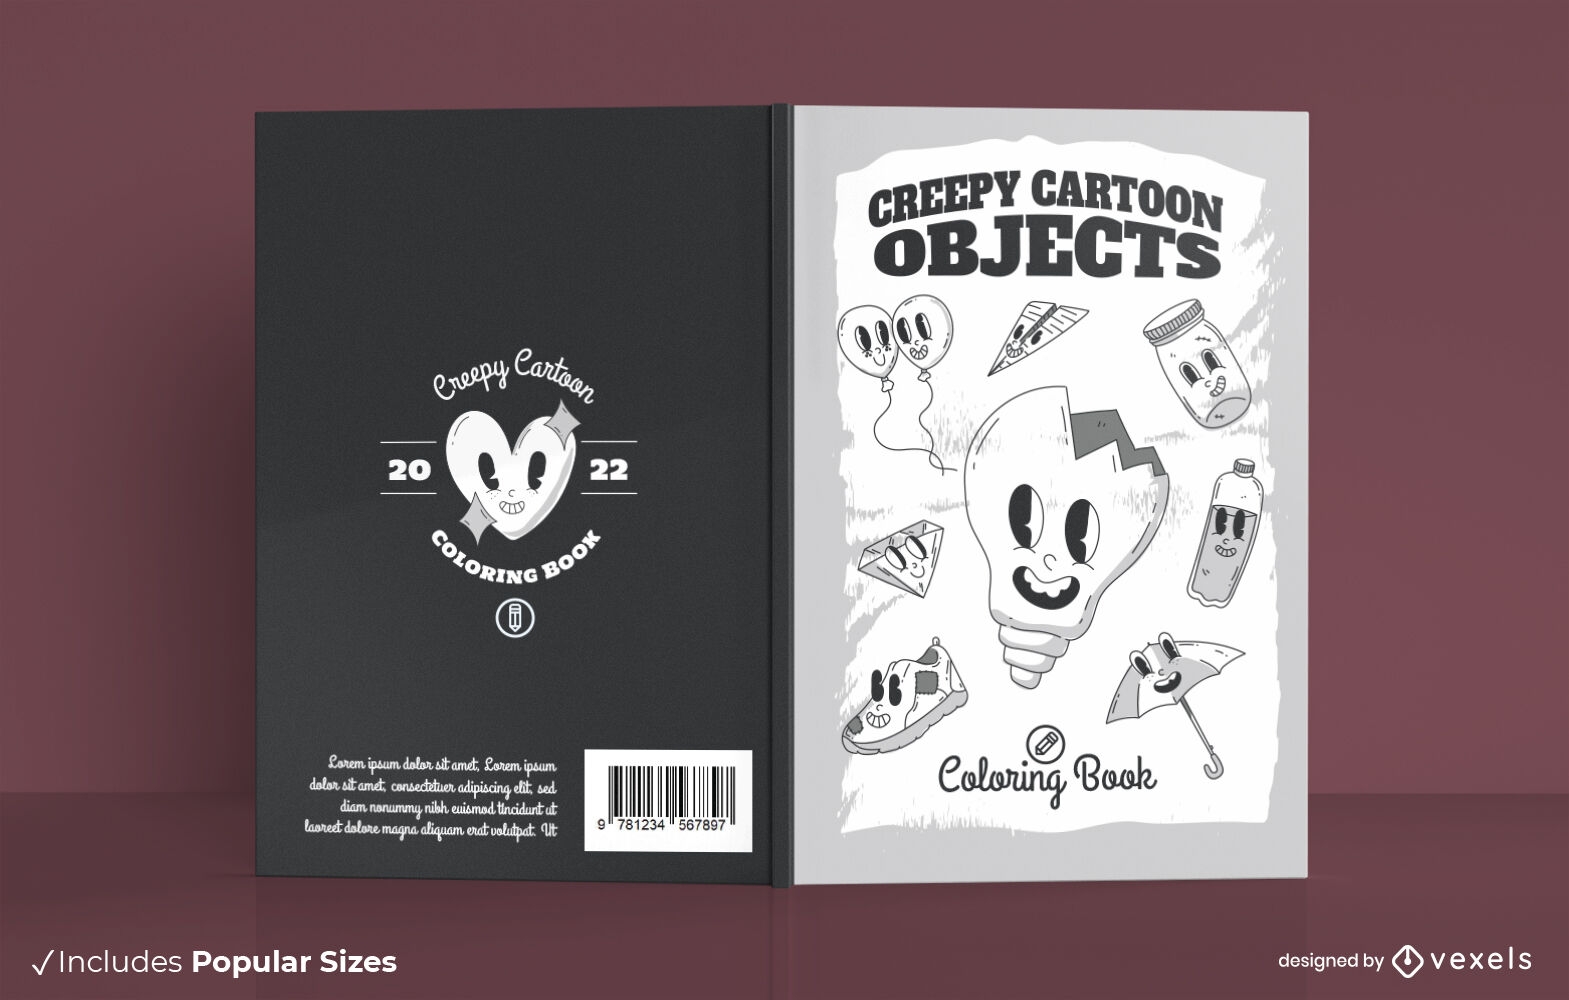 Creepy cartoon objects book cover design